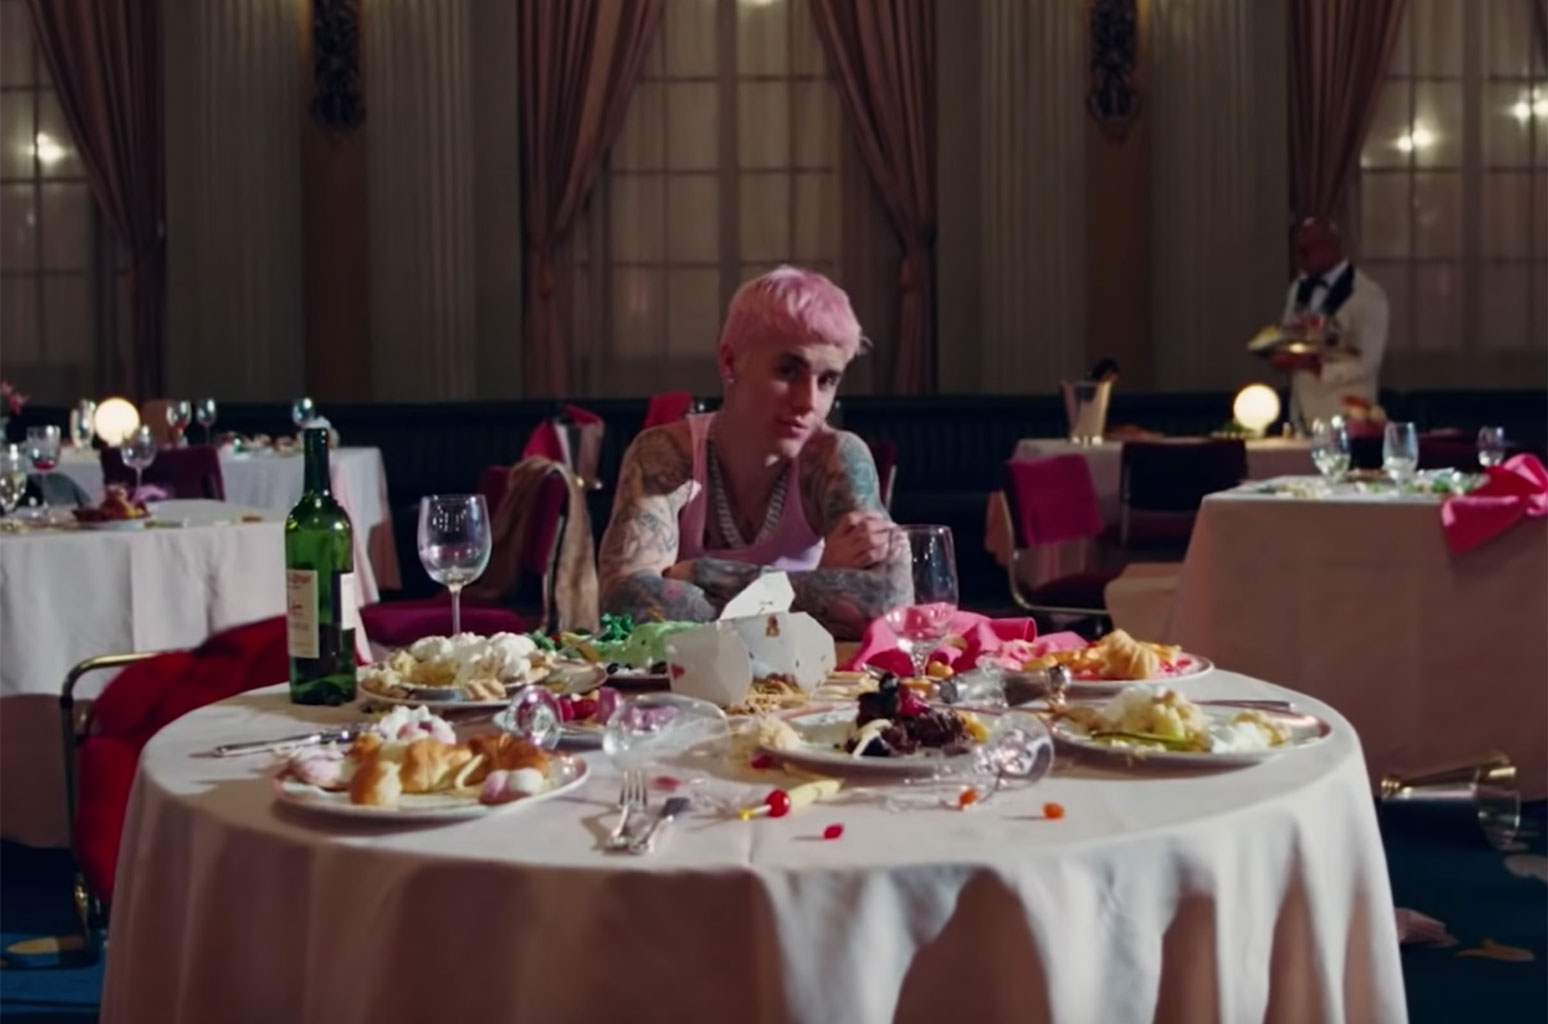 Chef Matty Matheson Breaks Down Justin Bieber's 'Yummy' Video Menu: 'I'd Love to Eat a Lobster Dinner With Bieber' - www.billboard.com - France